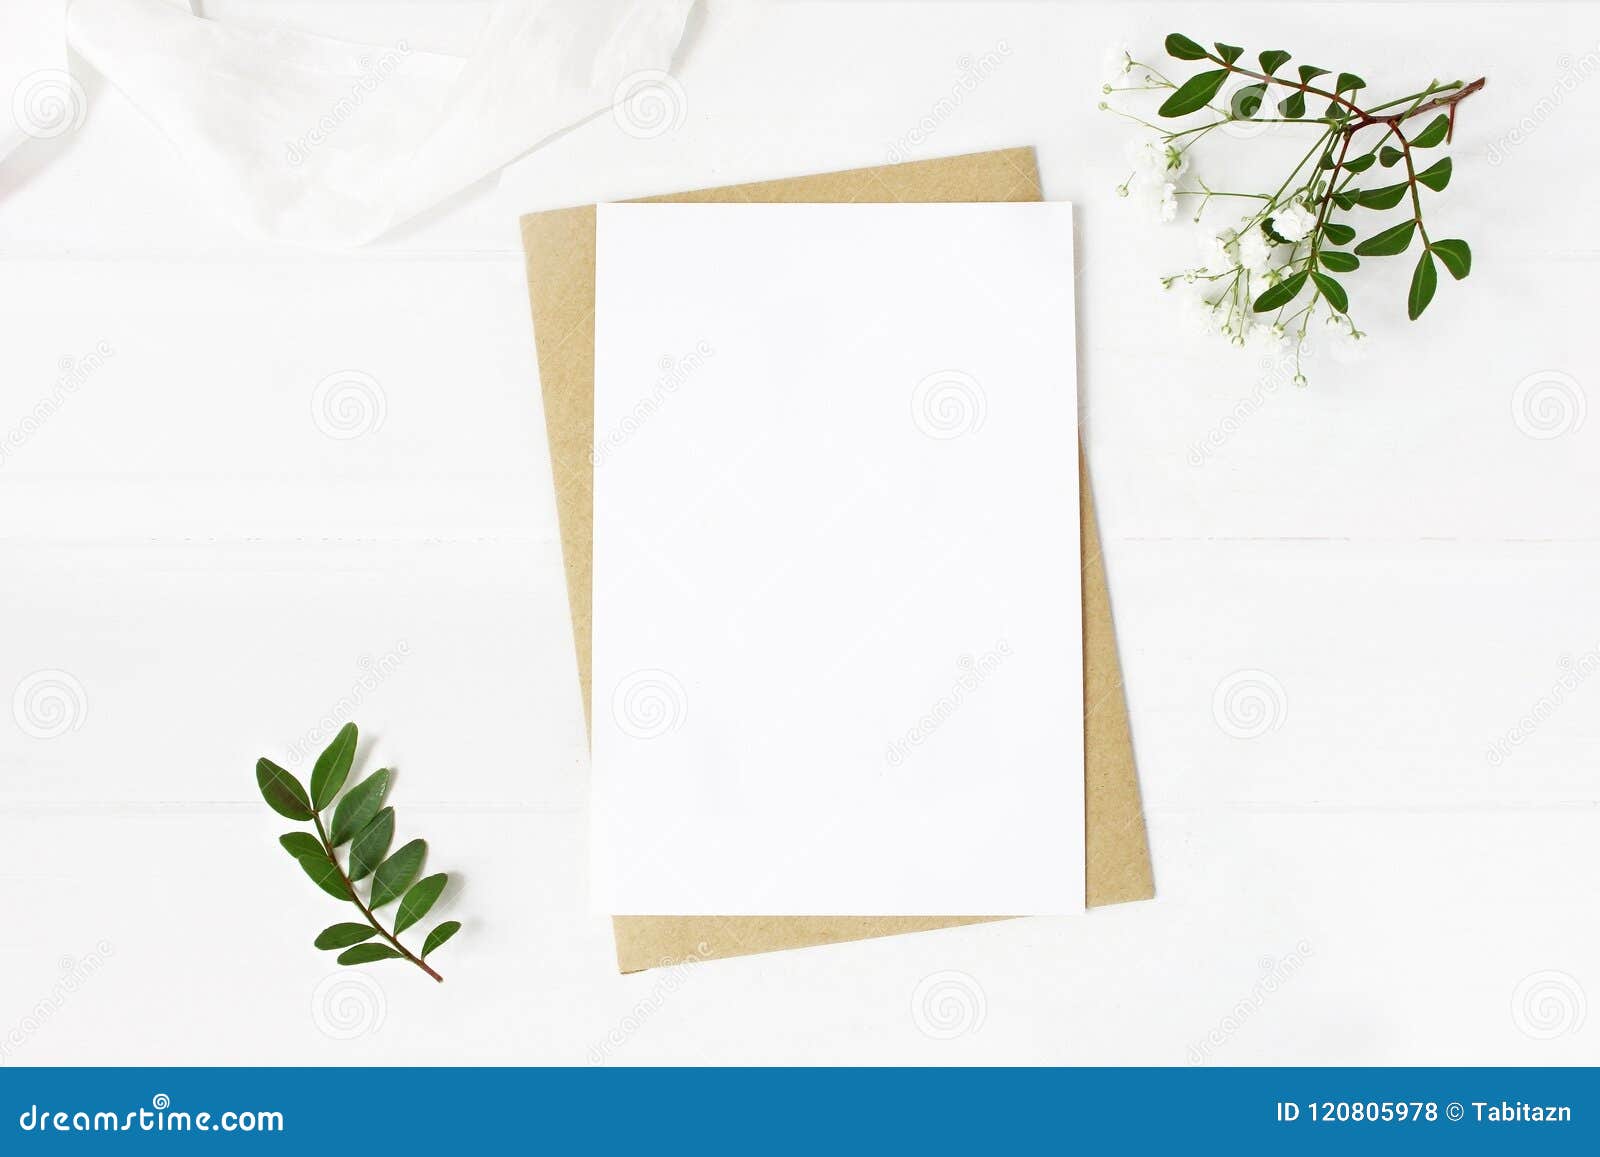 feminine wedding stationery, desktop mock-up scene. blank greeting card, craft envelope, baby`s breath flowers, silk